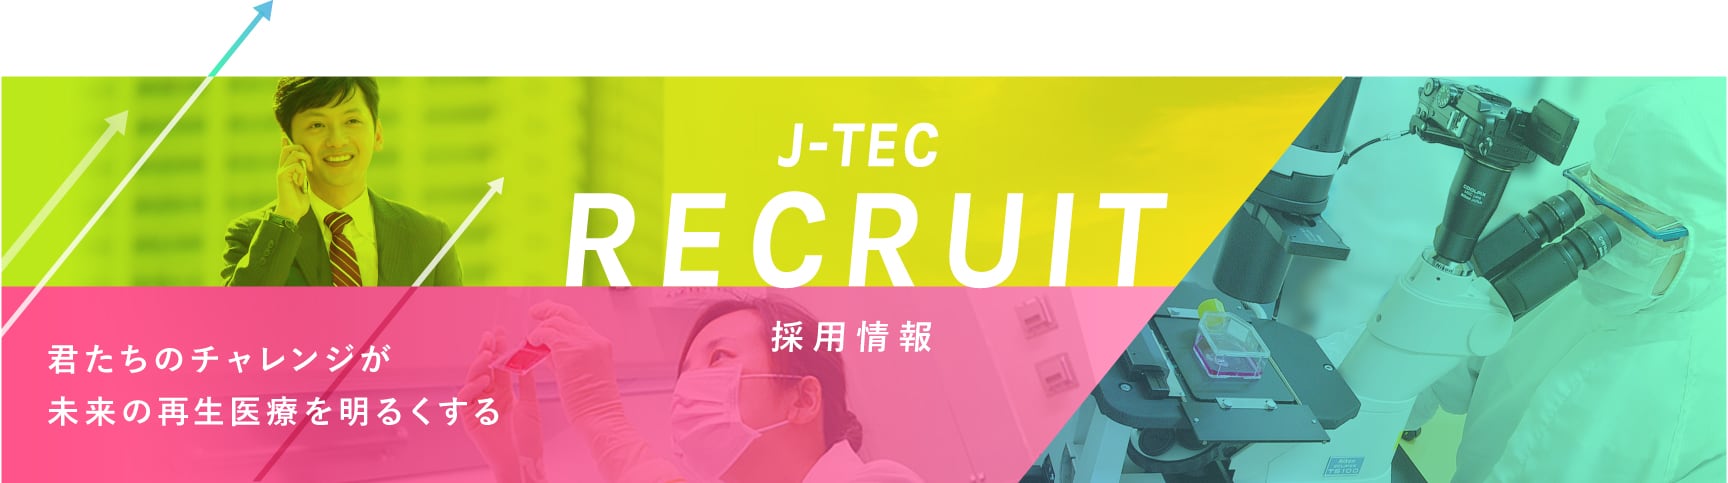 J-TEC RECRUIT 採用情報 2022